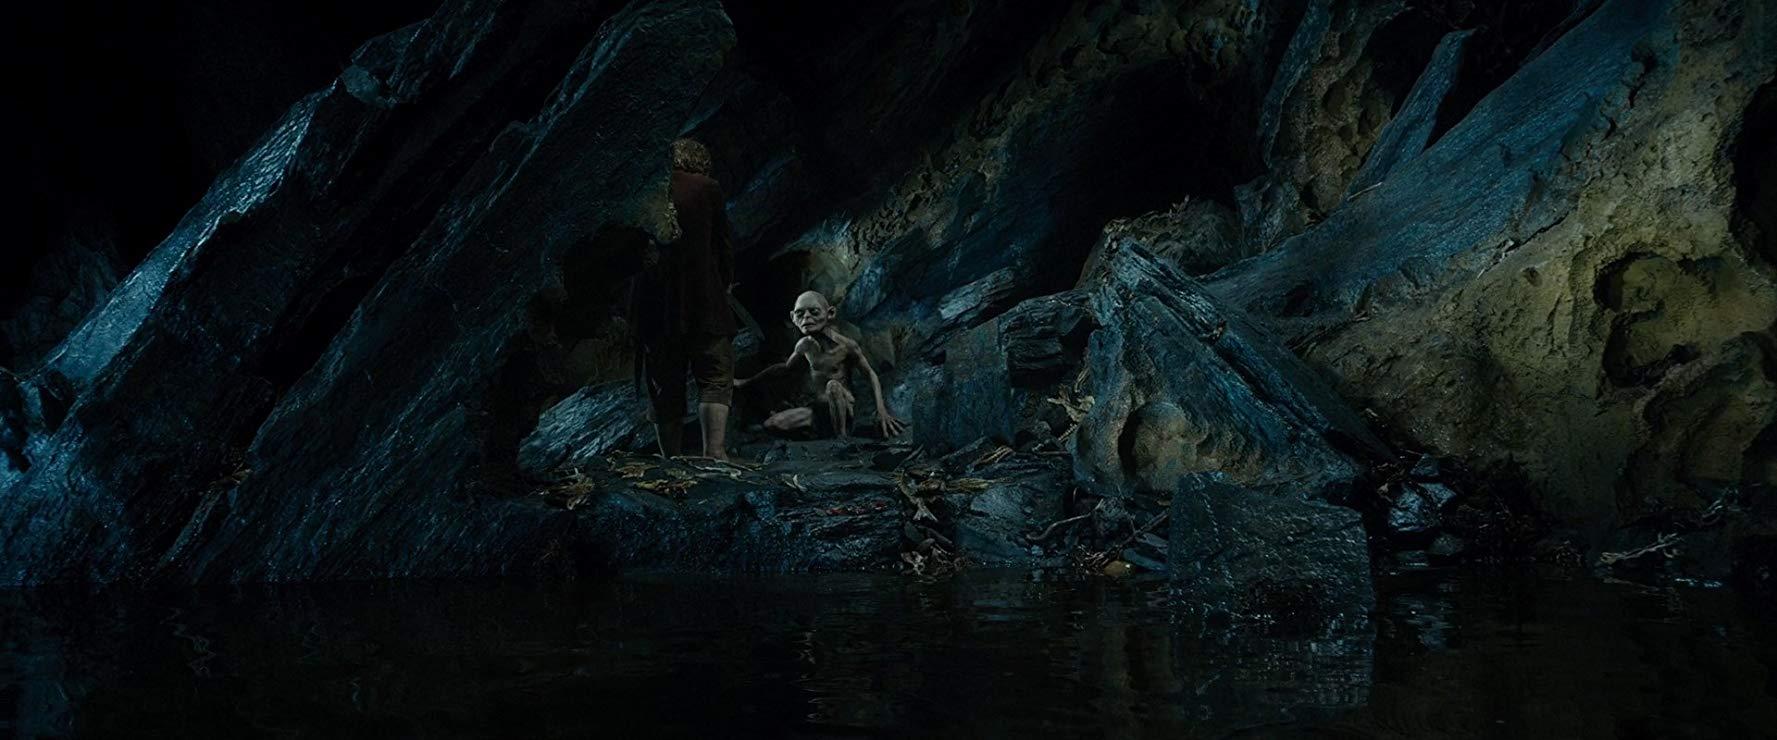 مشاهدة فيلم The Hobbit: An Unexpected Journey (2012) مترجم